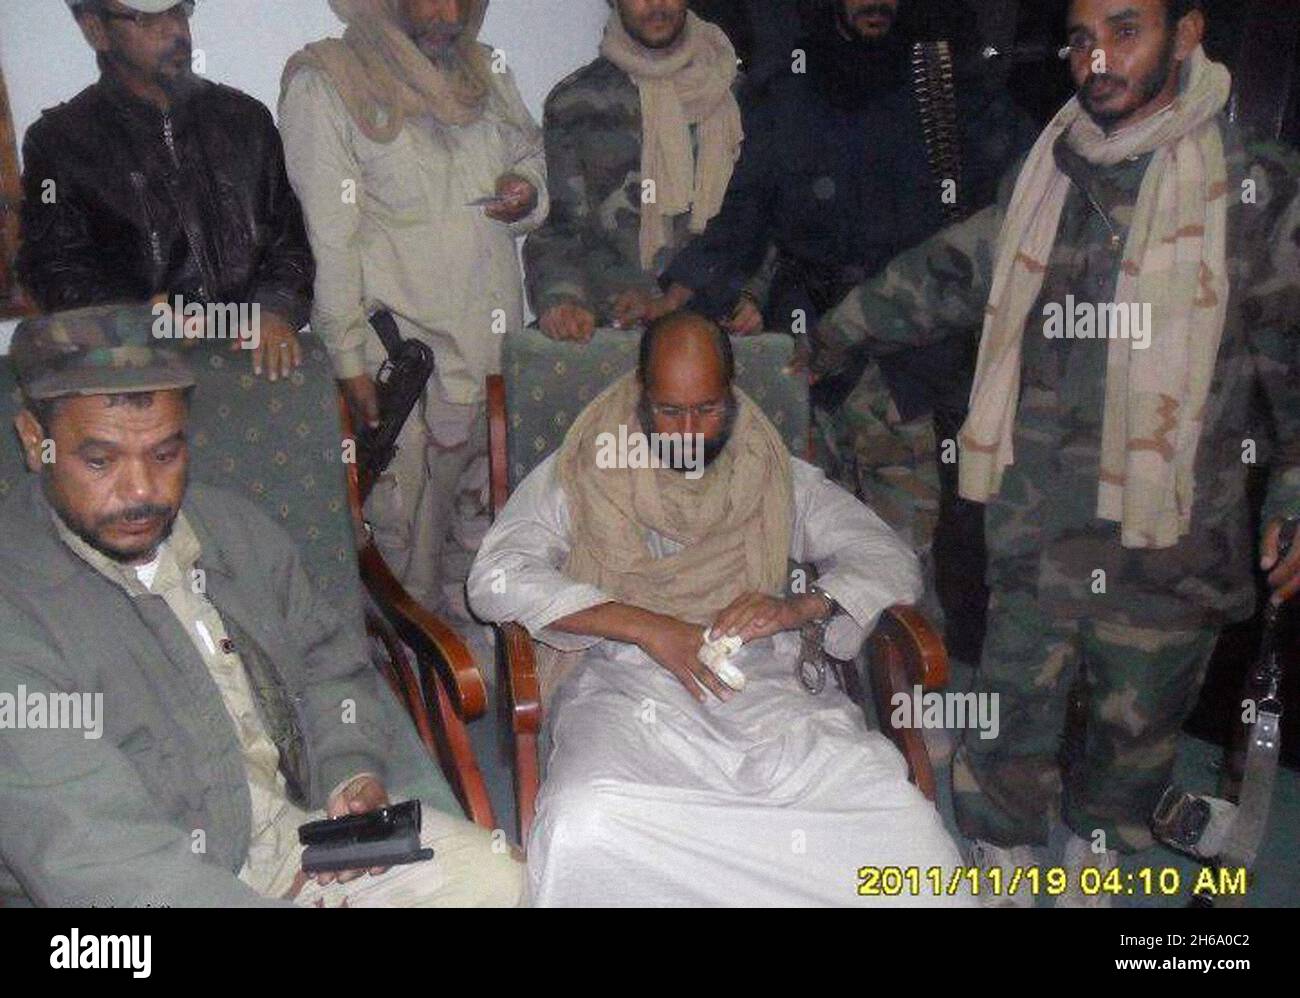 First images taken of former Libyan leader's son Saif Al Islam Gaddafi, as he was just captured by rebels of Abu Bakr brigade, near Sebha, Libya on November 19, 2011. Photo by Balkis Press/ABACAPRESS.COM Stock Photo